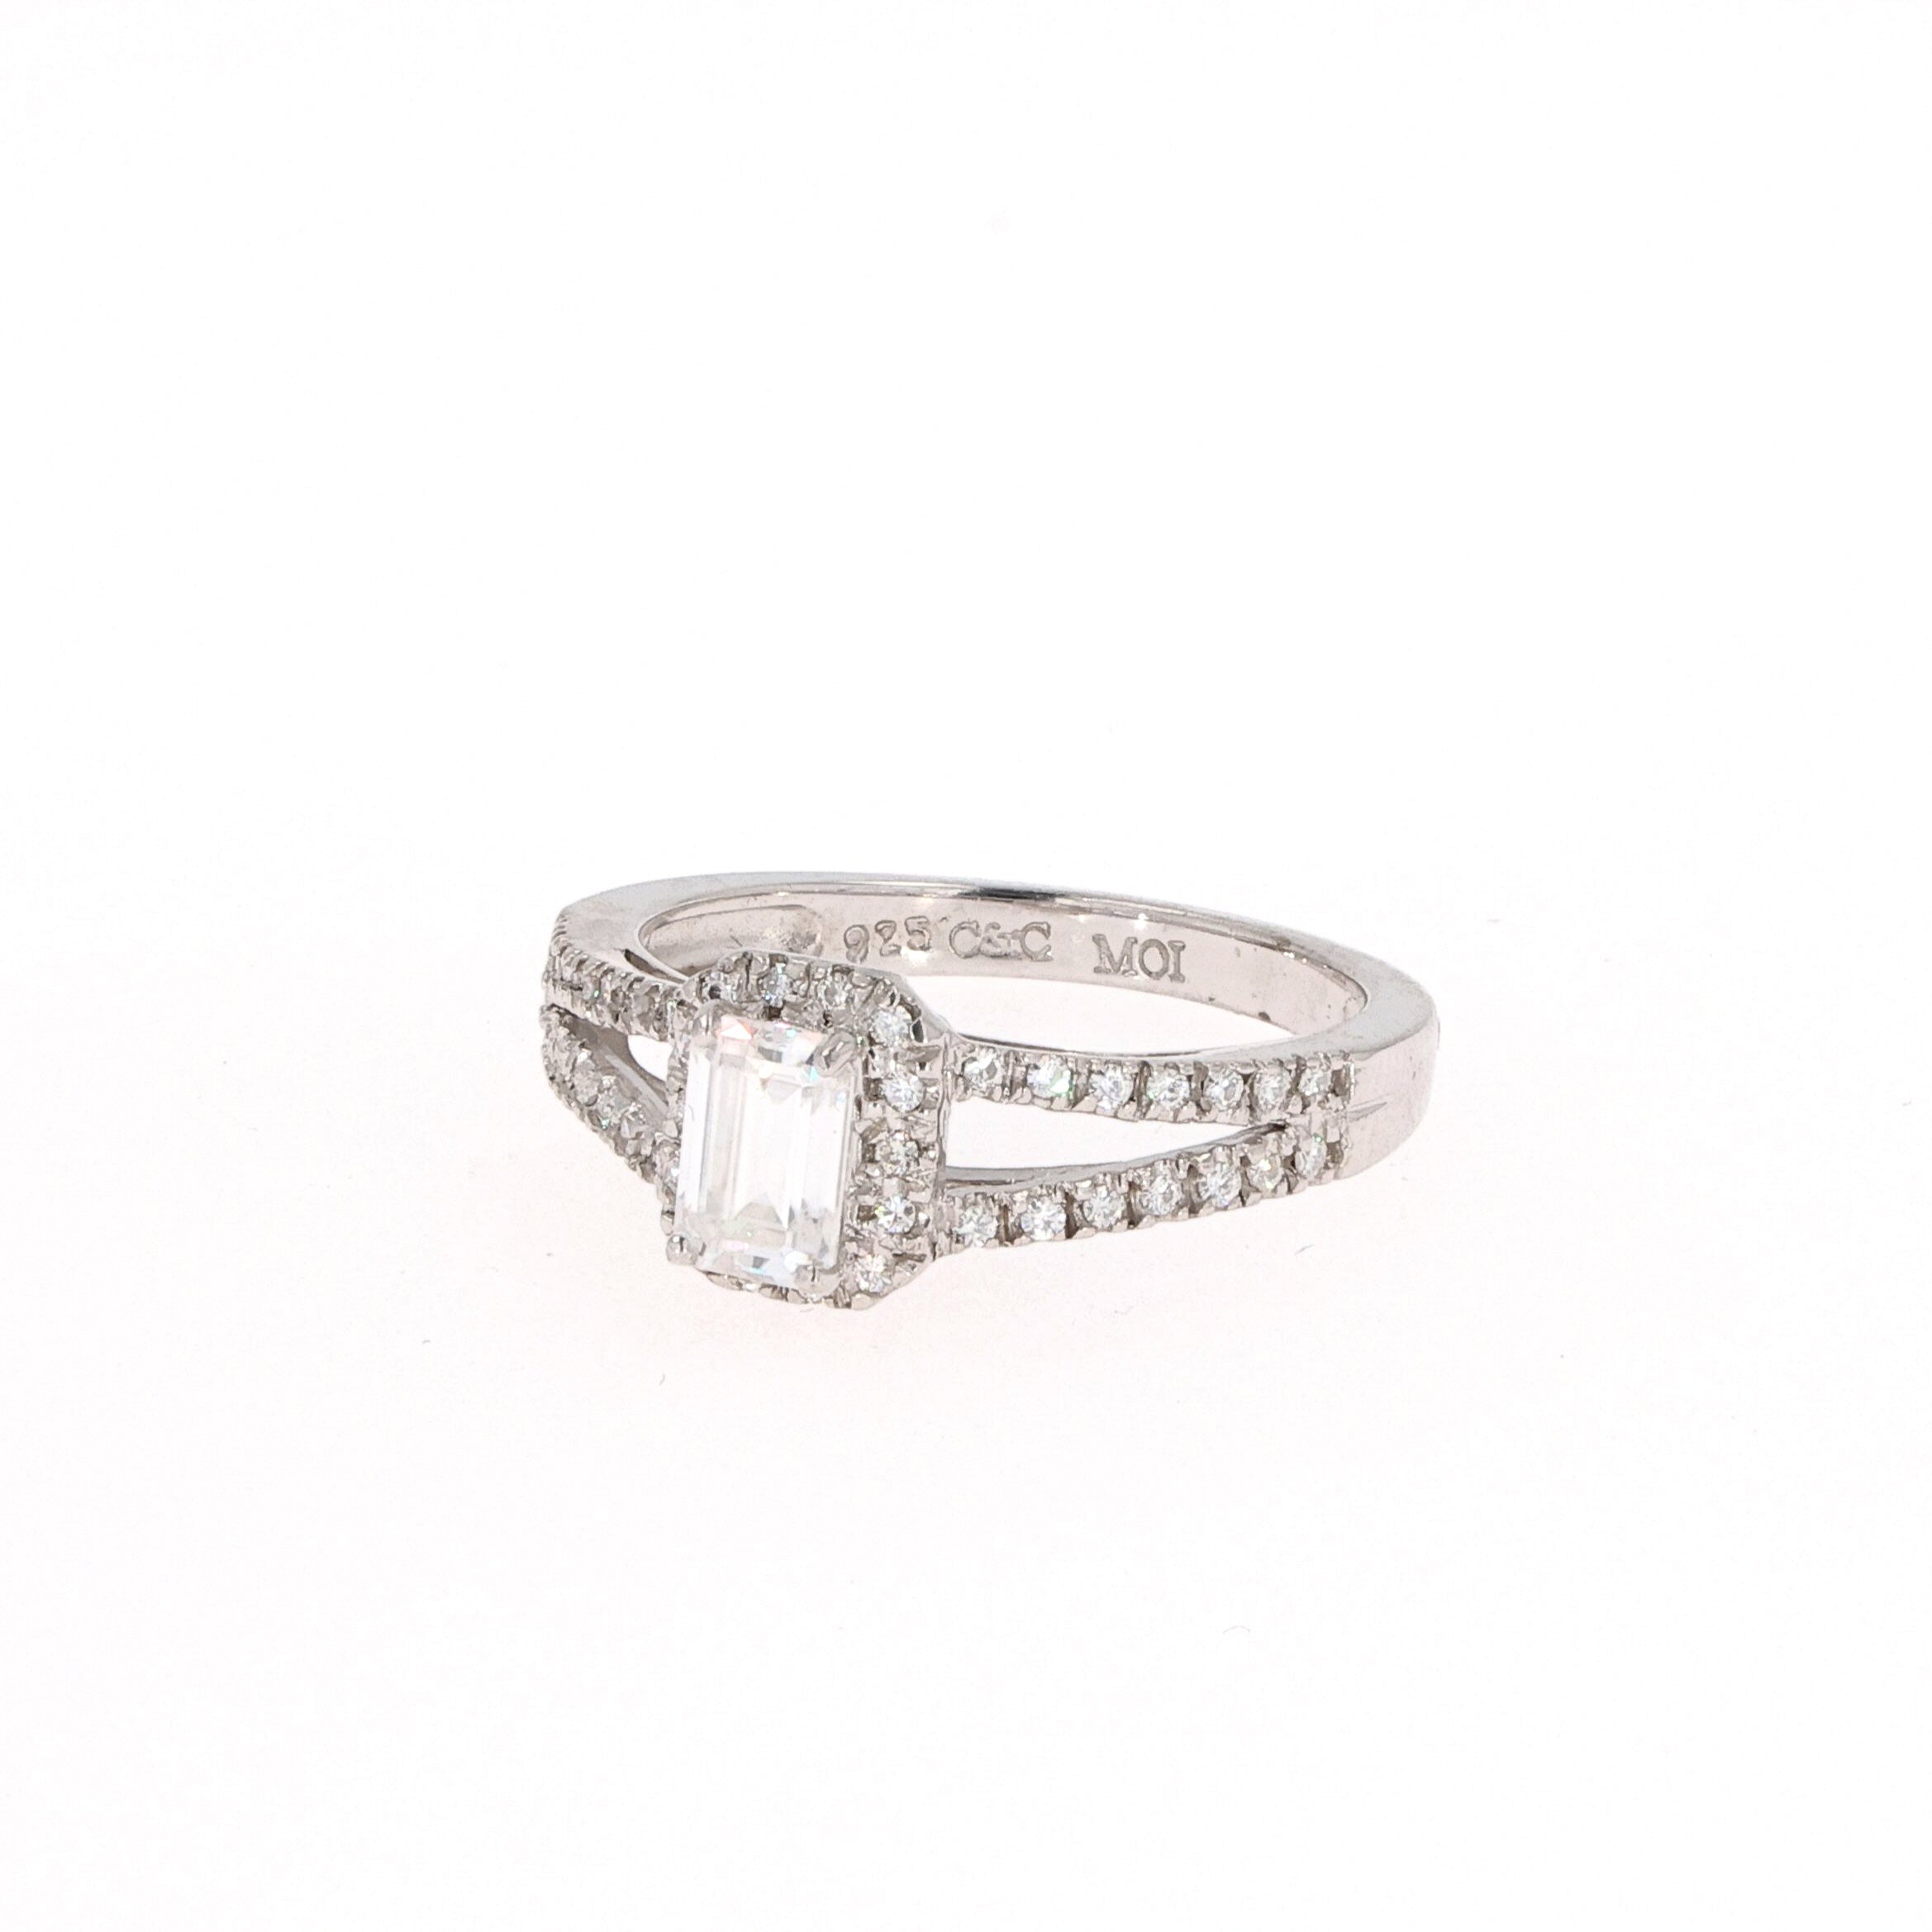 1.11 CTW DEW Emerald Forever One™ Moissanite Ring